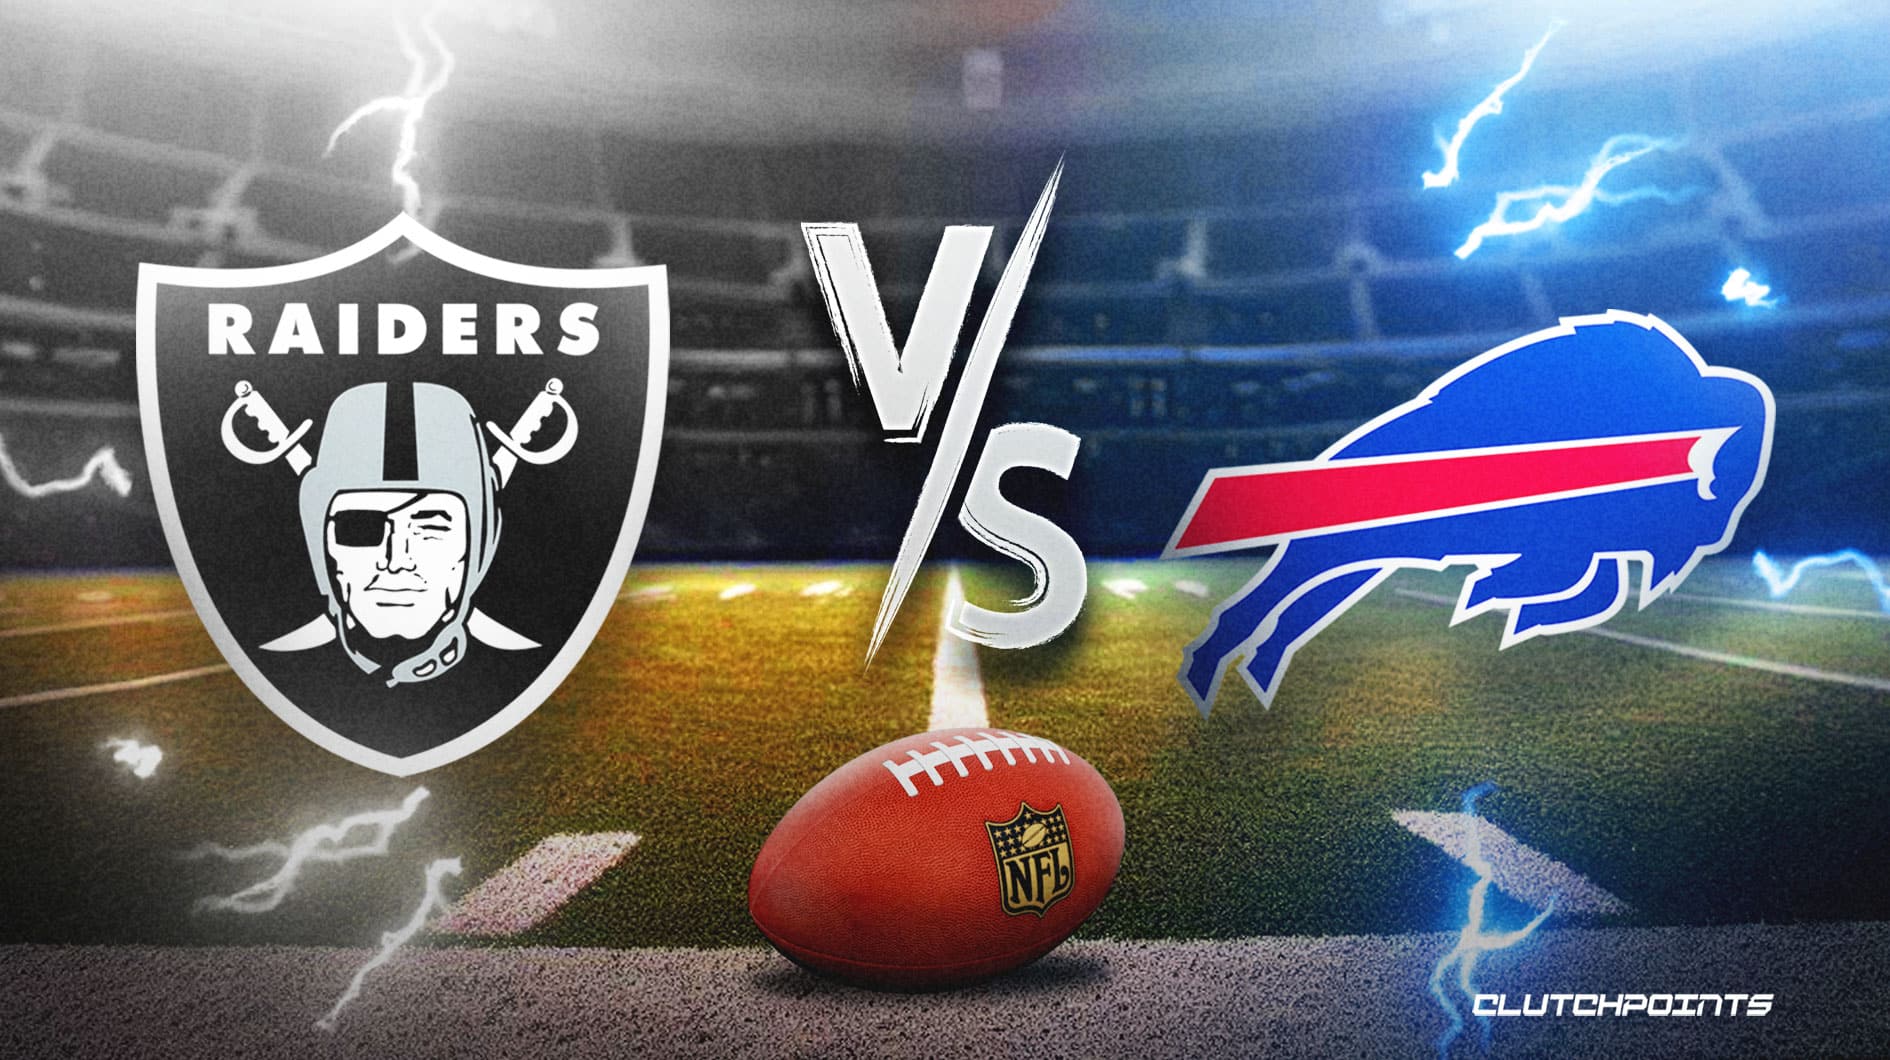 RaidersBills prediction, odds, pick, how to watch NFL Week 2 game